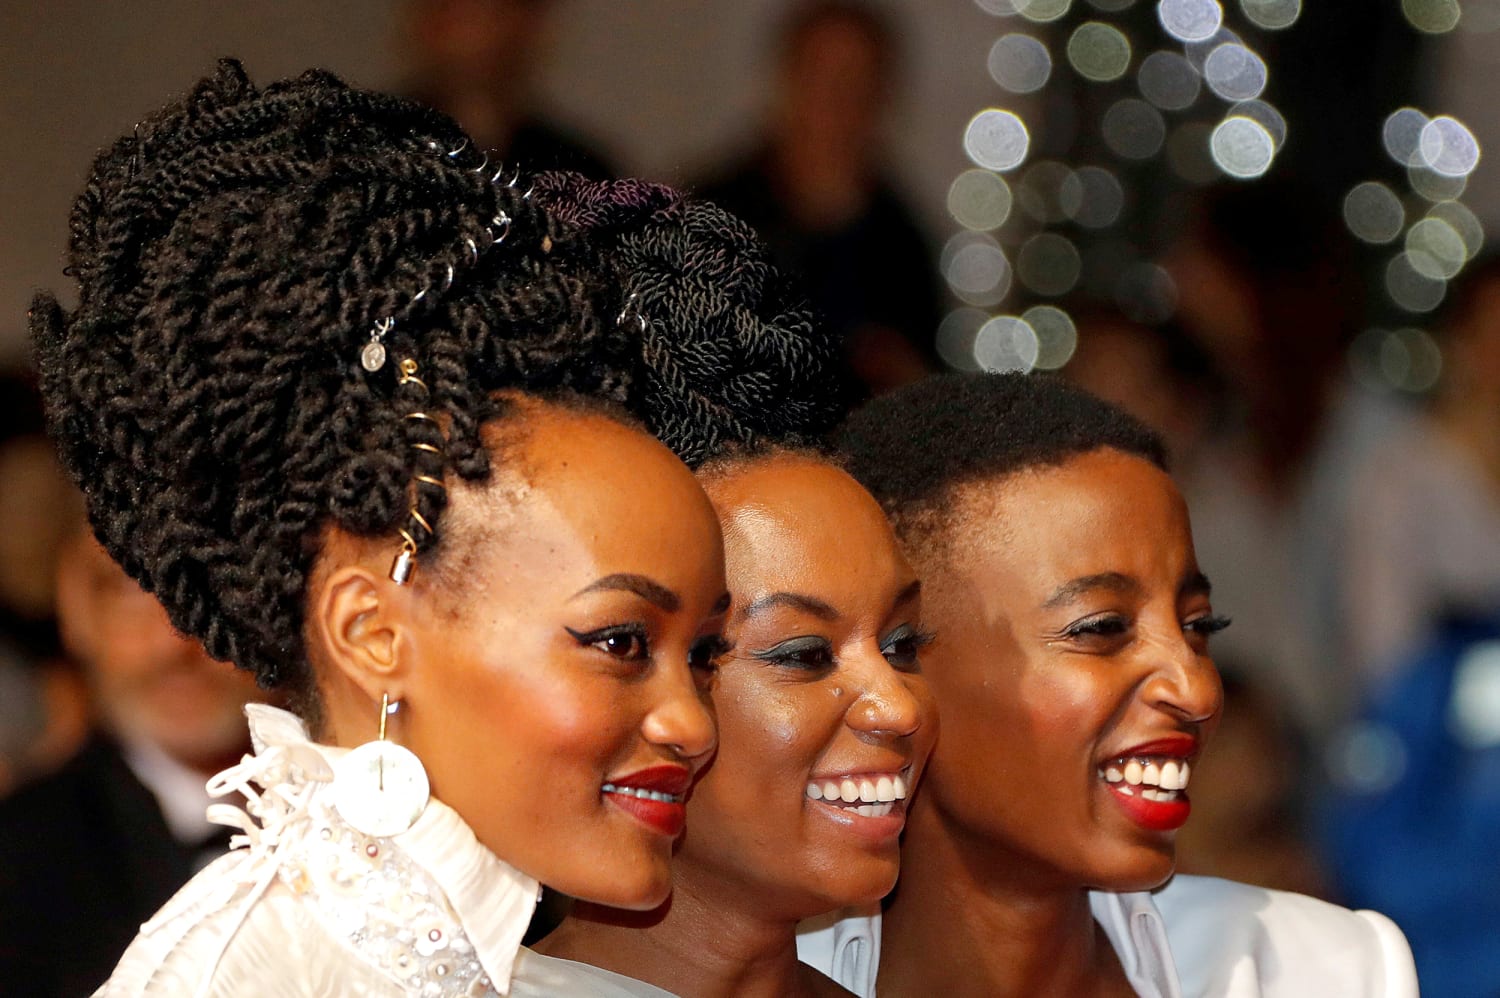 Lesbian romance director sues Kenya to lift ban on film pic image